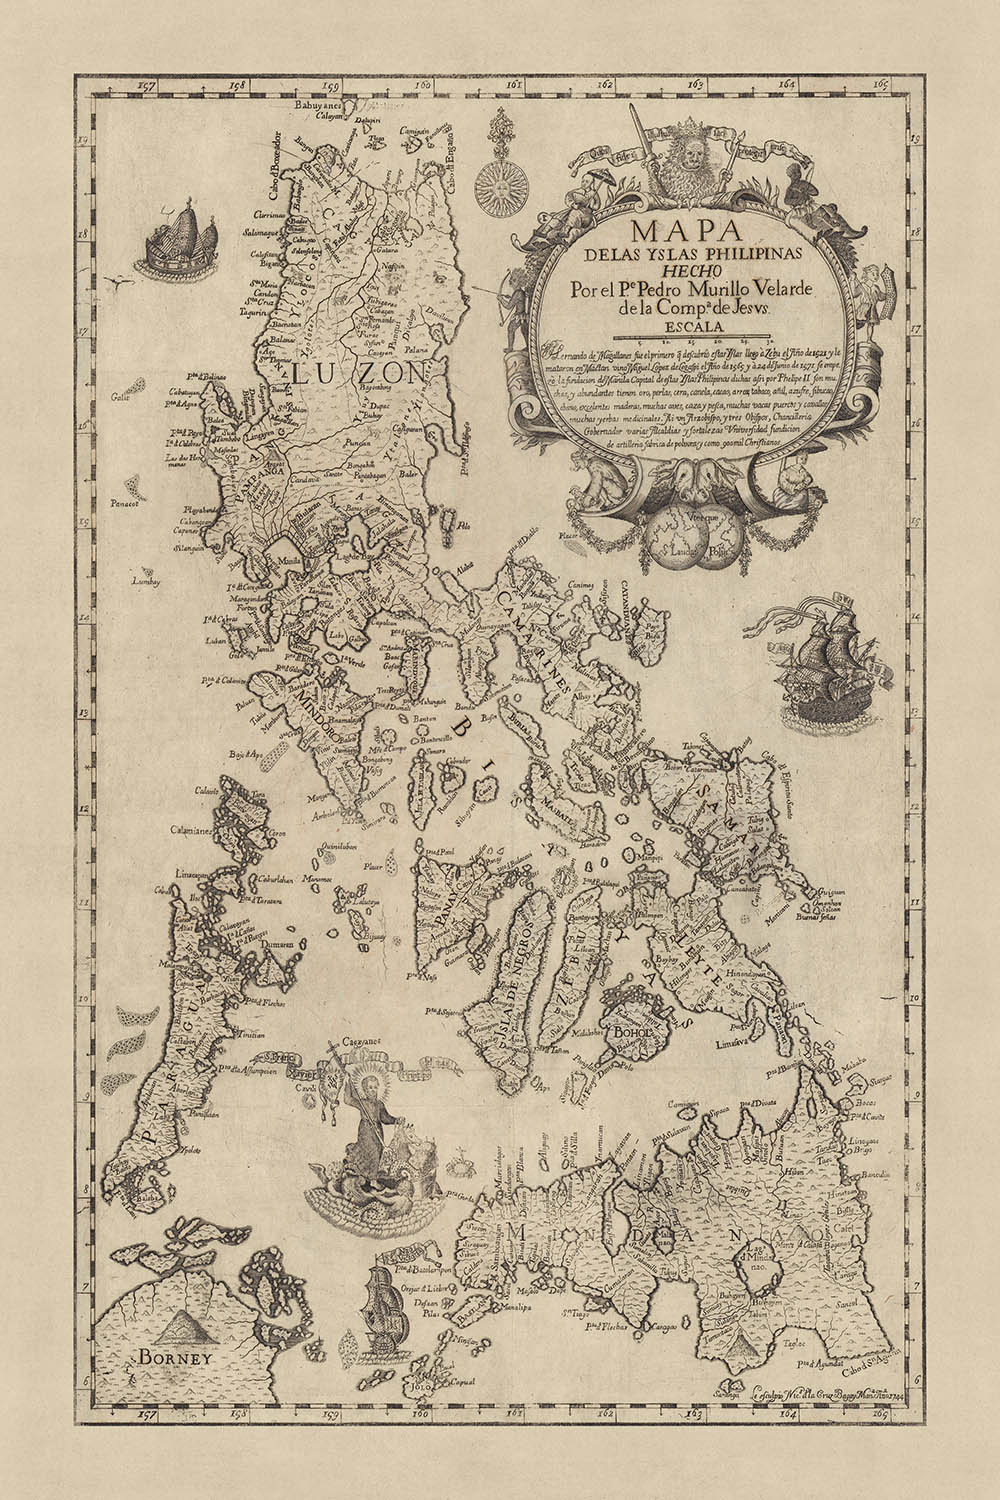 Ancienne carte picturale des Philippines par Murillo Velarde, 1744 : Manille, Cebu, Zamboanga, mer de Sulu, cartouche décorative